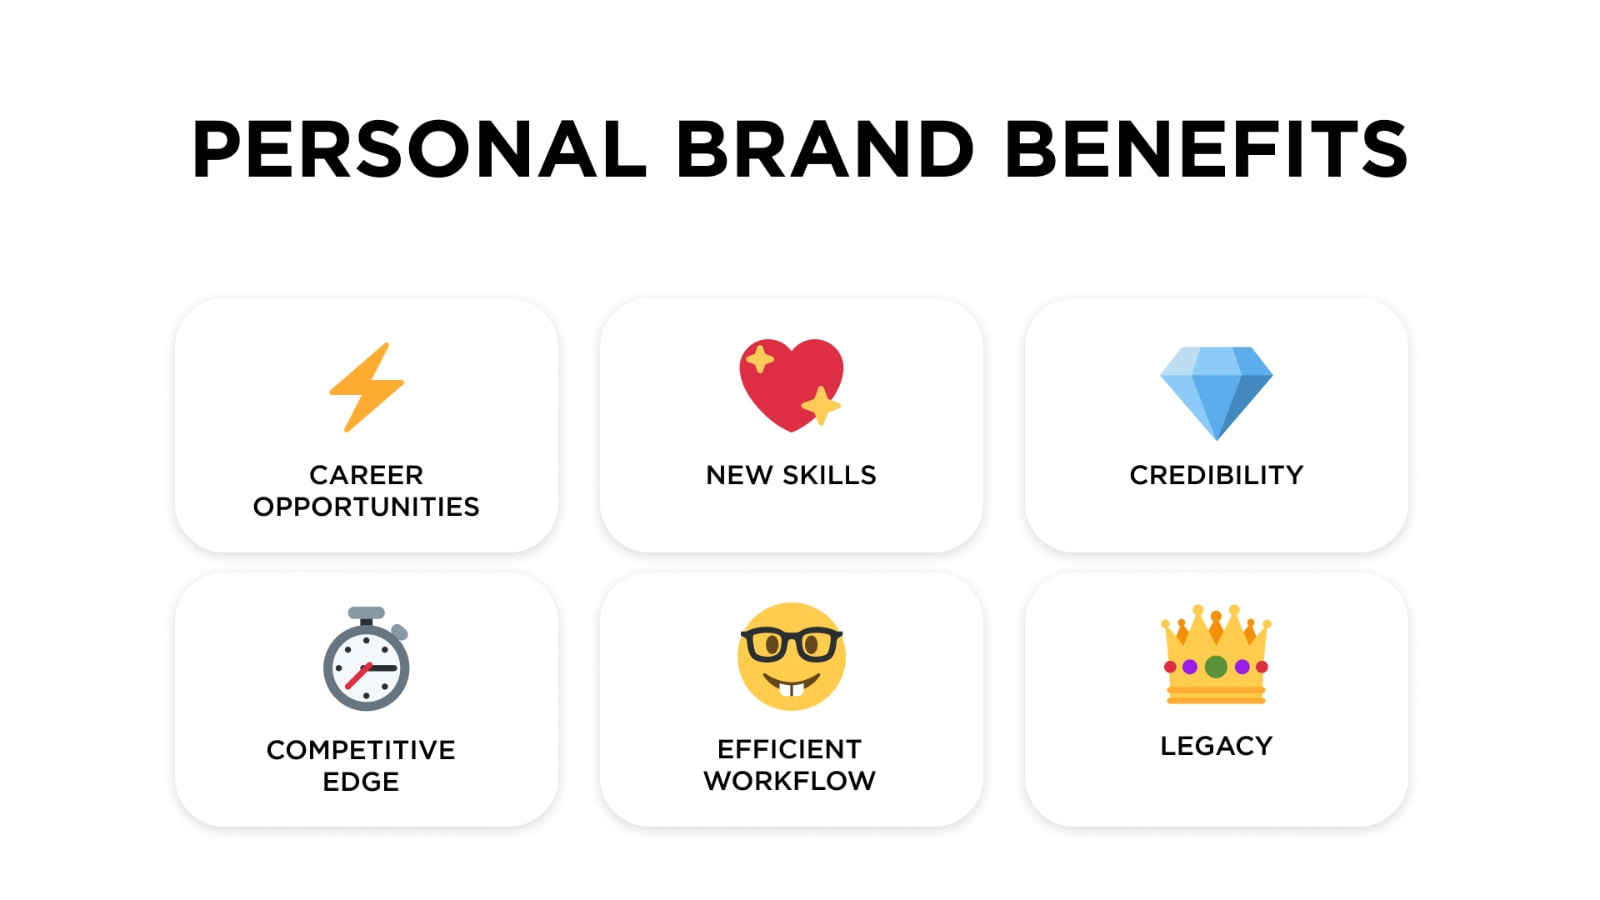 Personal brand benefits